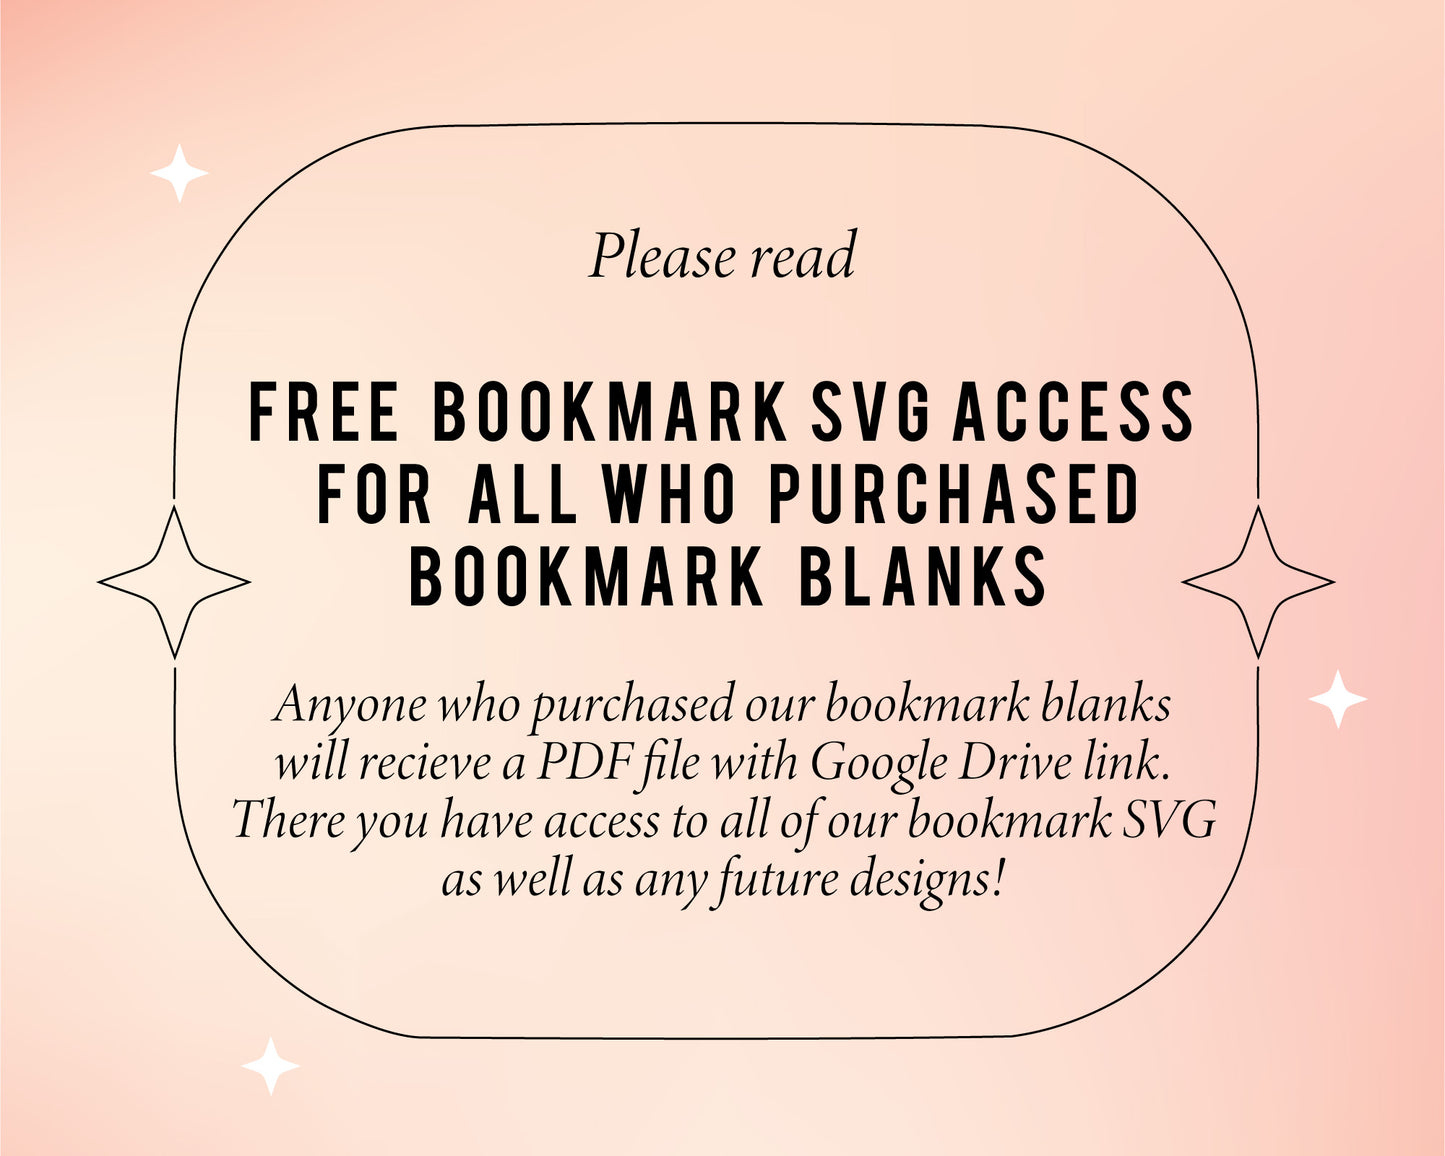 Snowman Bookmark SVG | Ornament Bookmark SVG